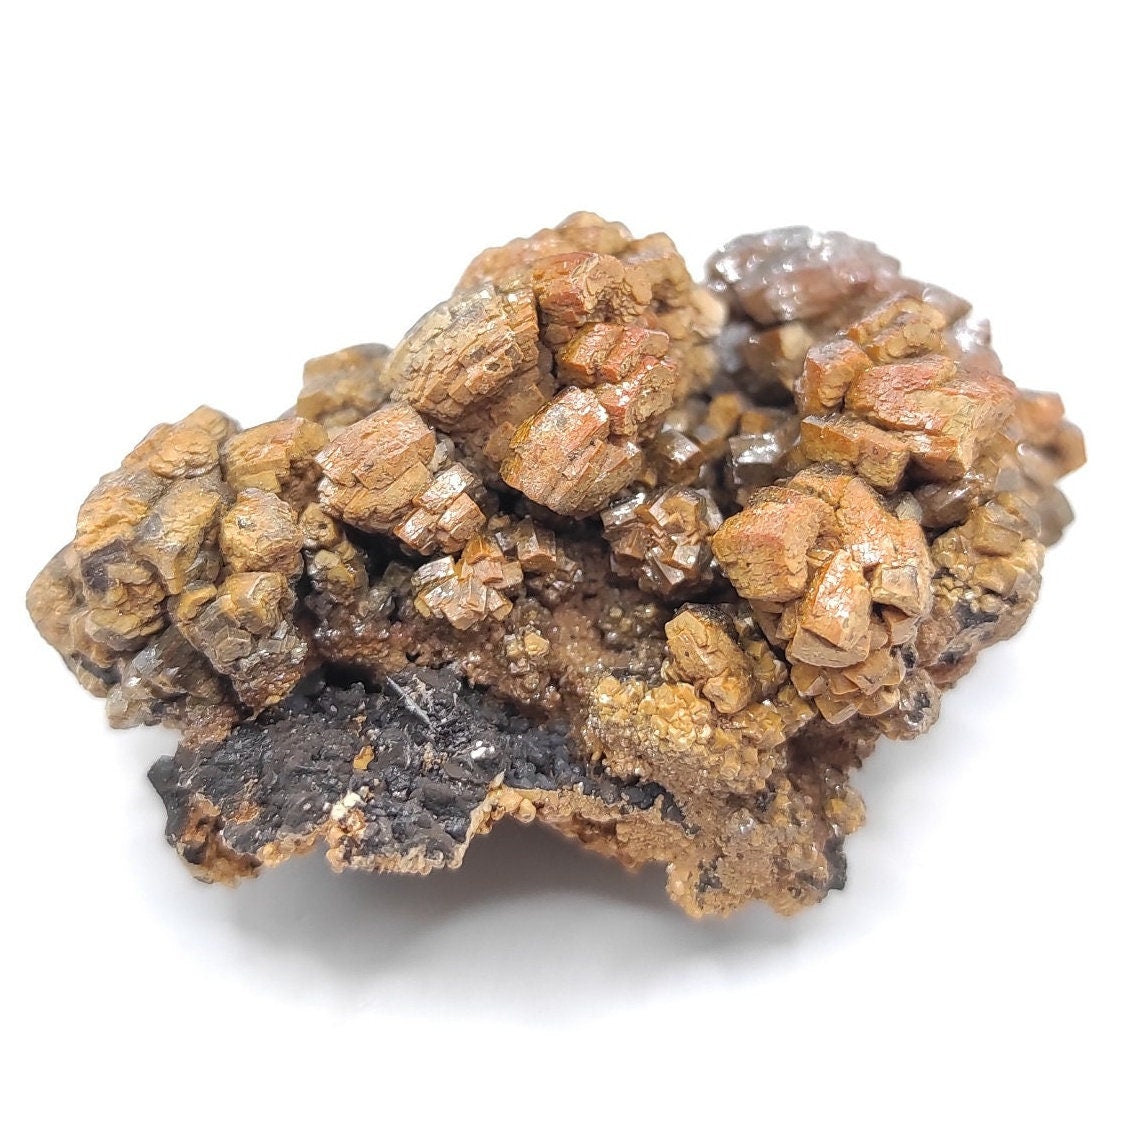 42g Vanadinite var. Endlichite - New Variety Find (April 2023) - Vanadinite Mineral Specimen from Mibladen, Morocco - Coud'a Workings